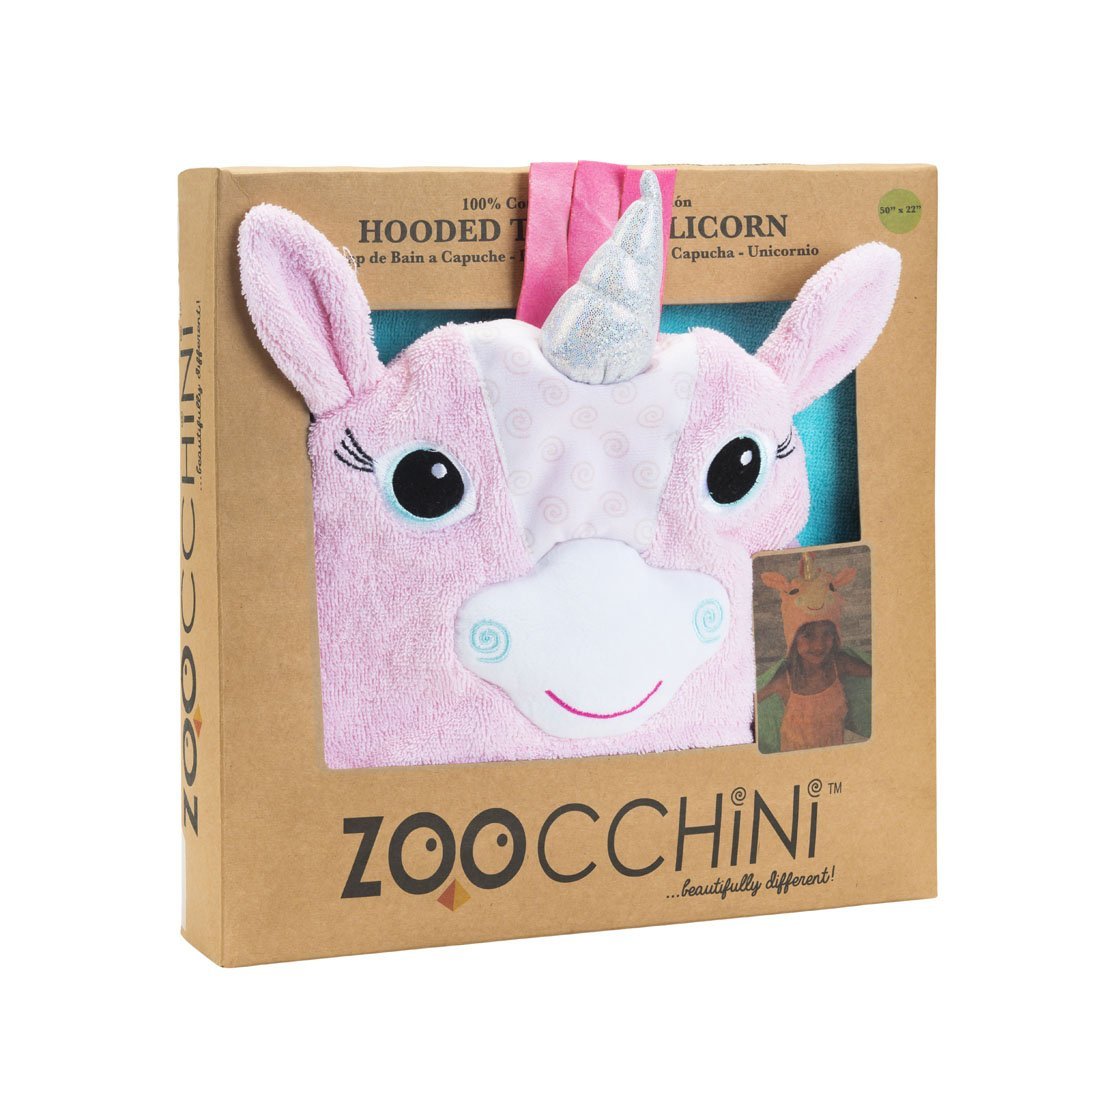 Zoocchini Hooded Towel - Ali the Unicorn